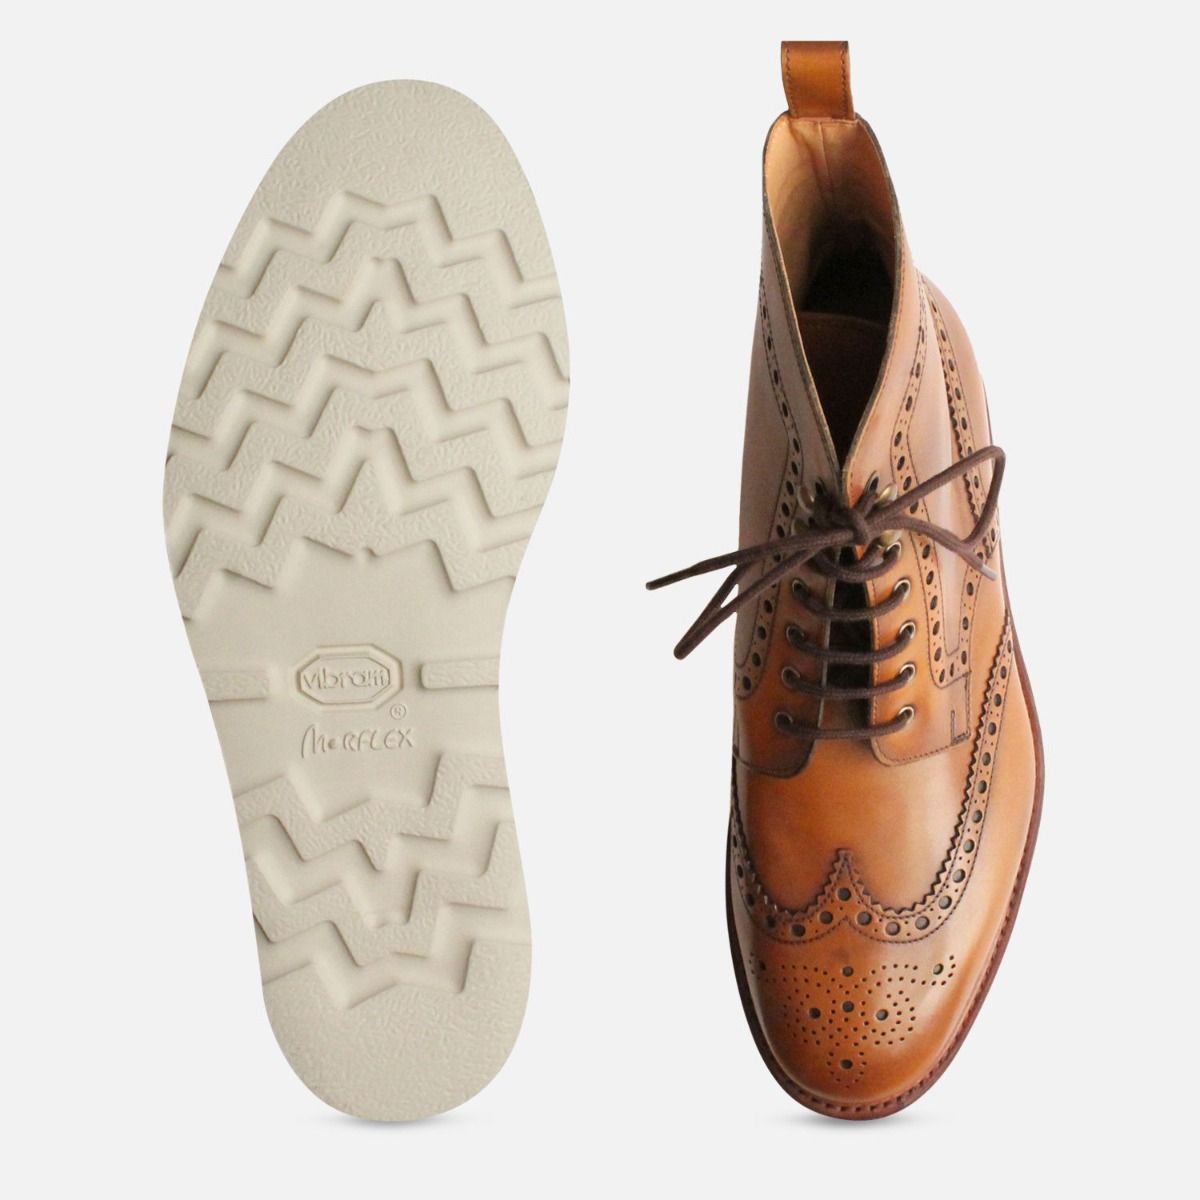 Designer Italian Brogue Boots Goodyear 